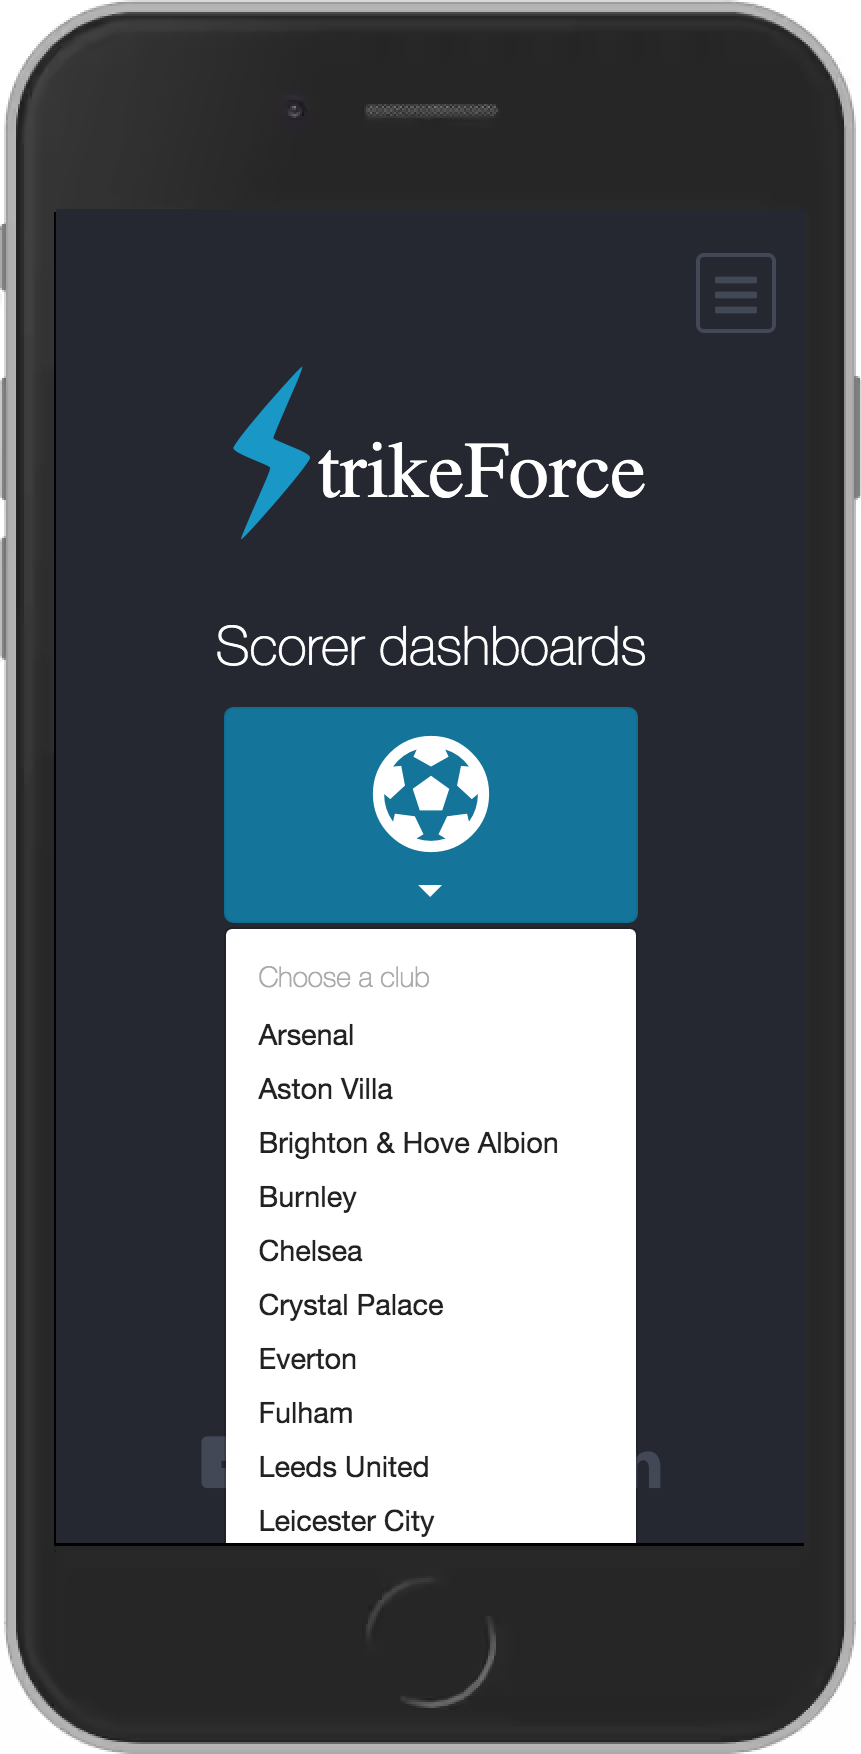 StrikeForce Dashboards page Scorers first dropdown menu